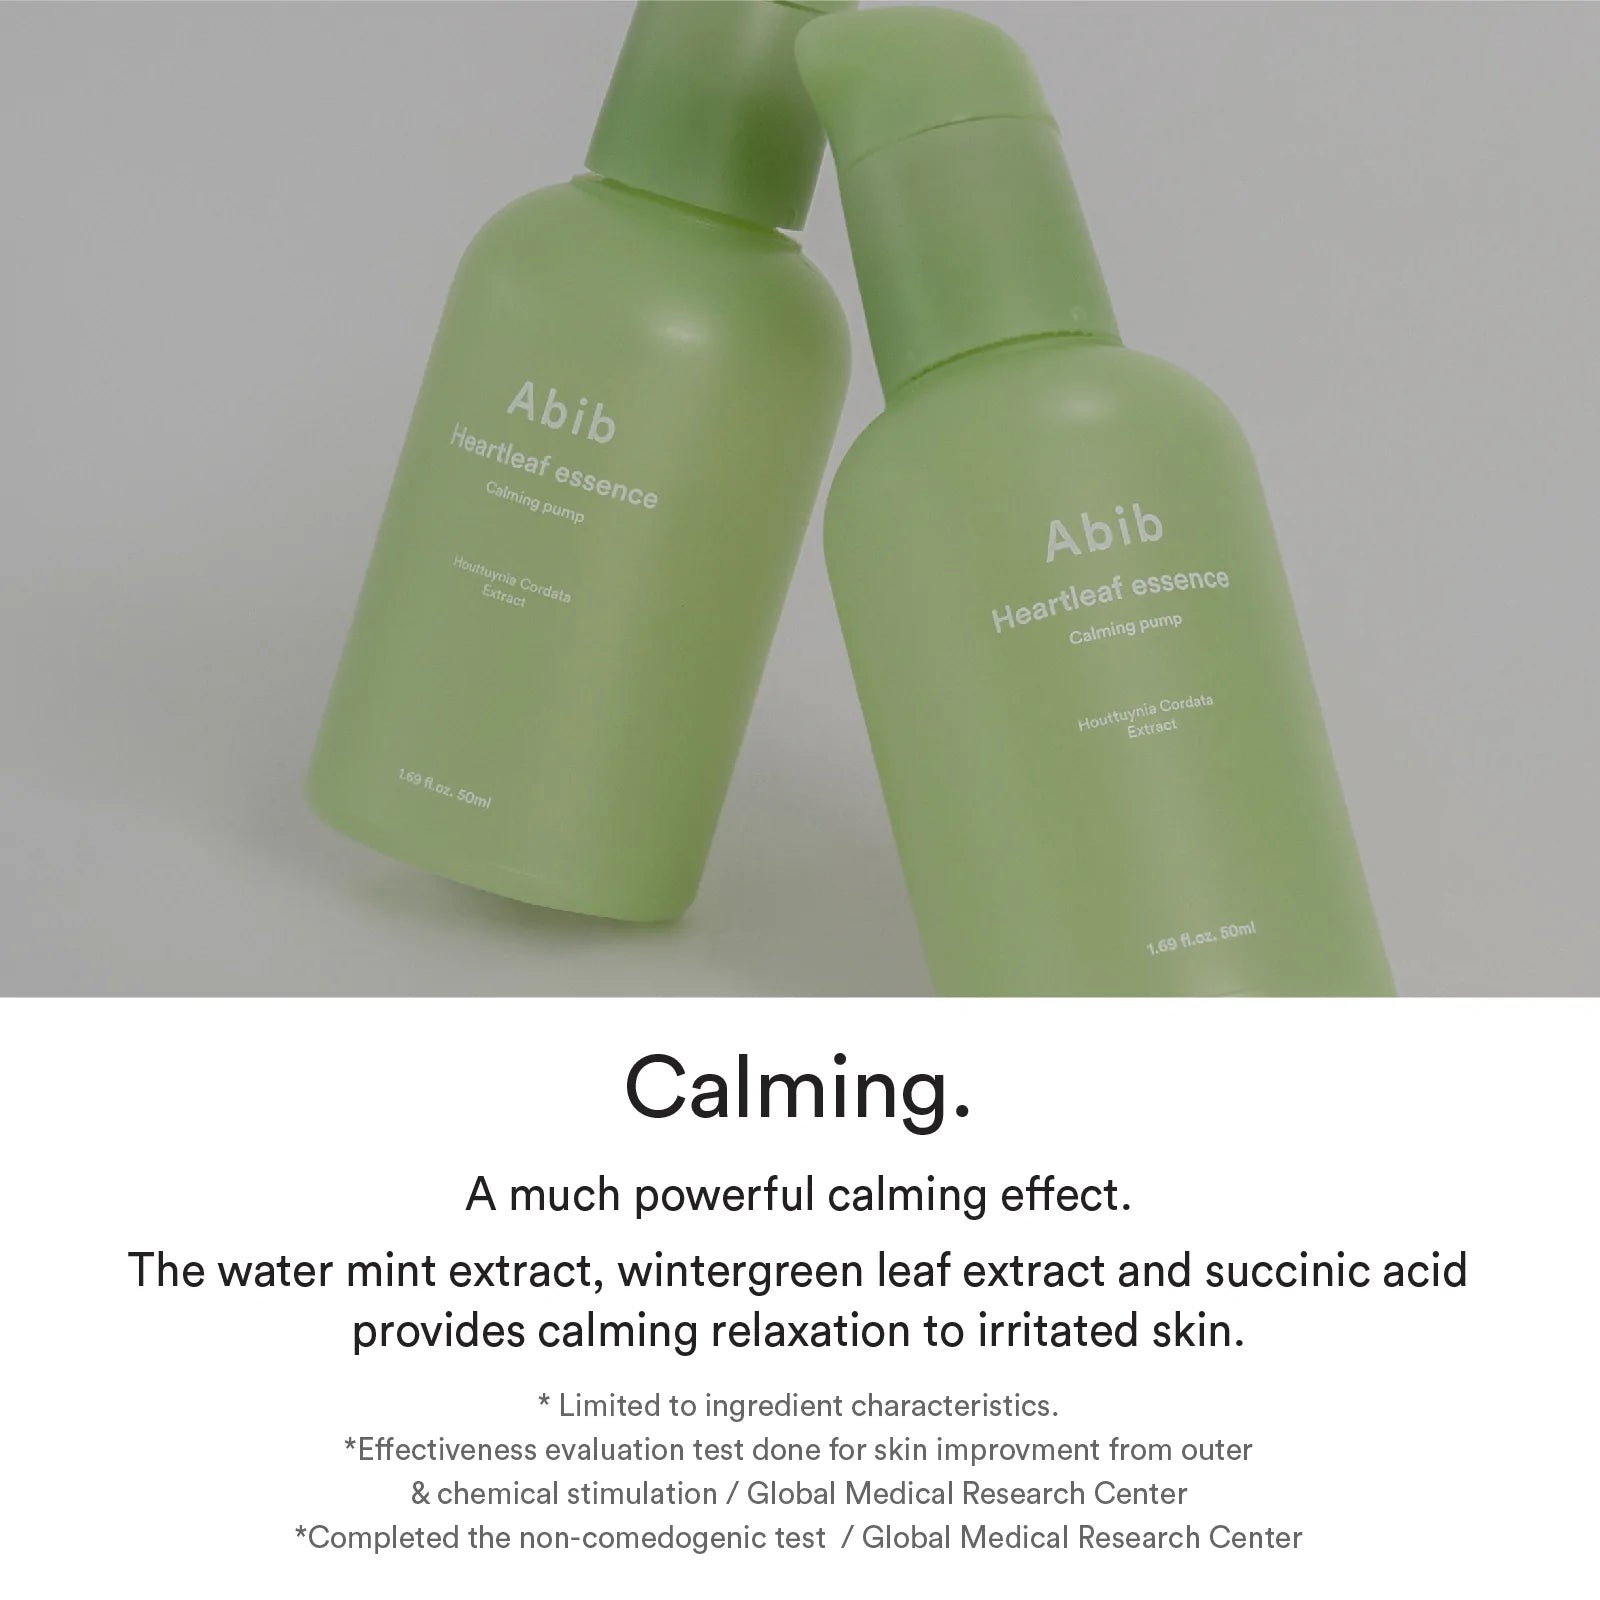 Abib - Heartleaf Essence Calming Pump